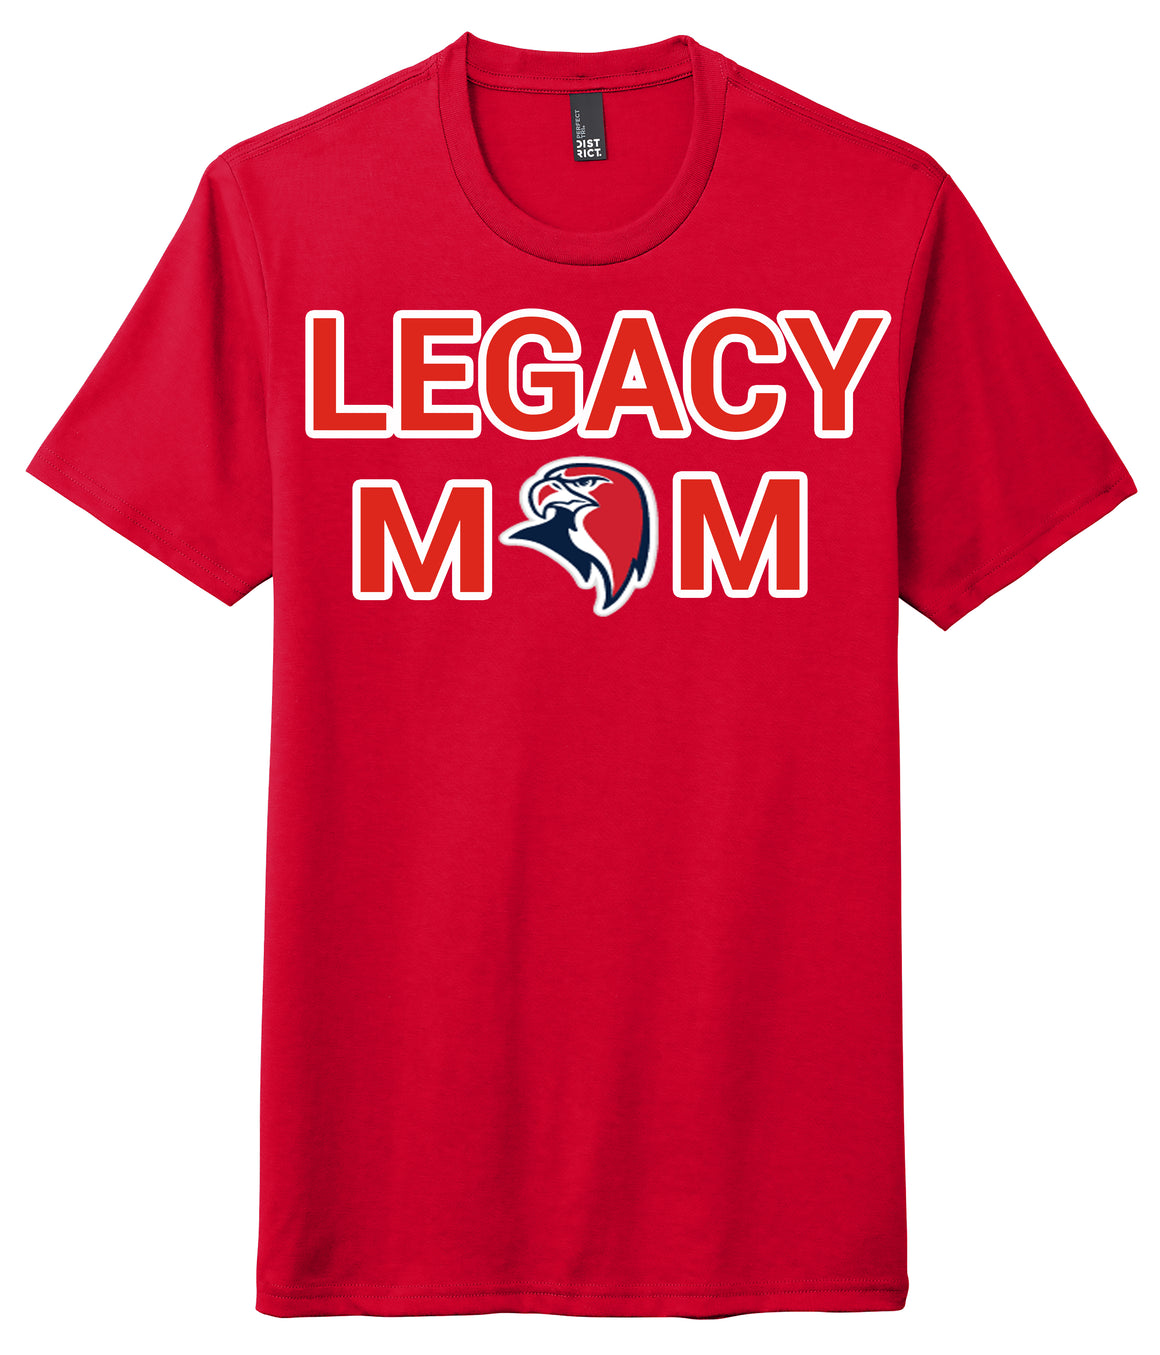 Legacy Traditional School Surprise - Mom Shirt